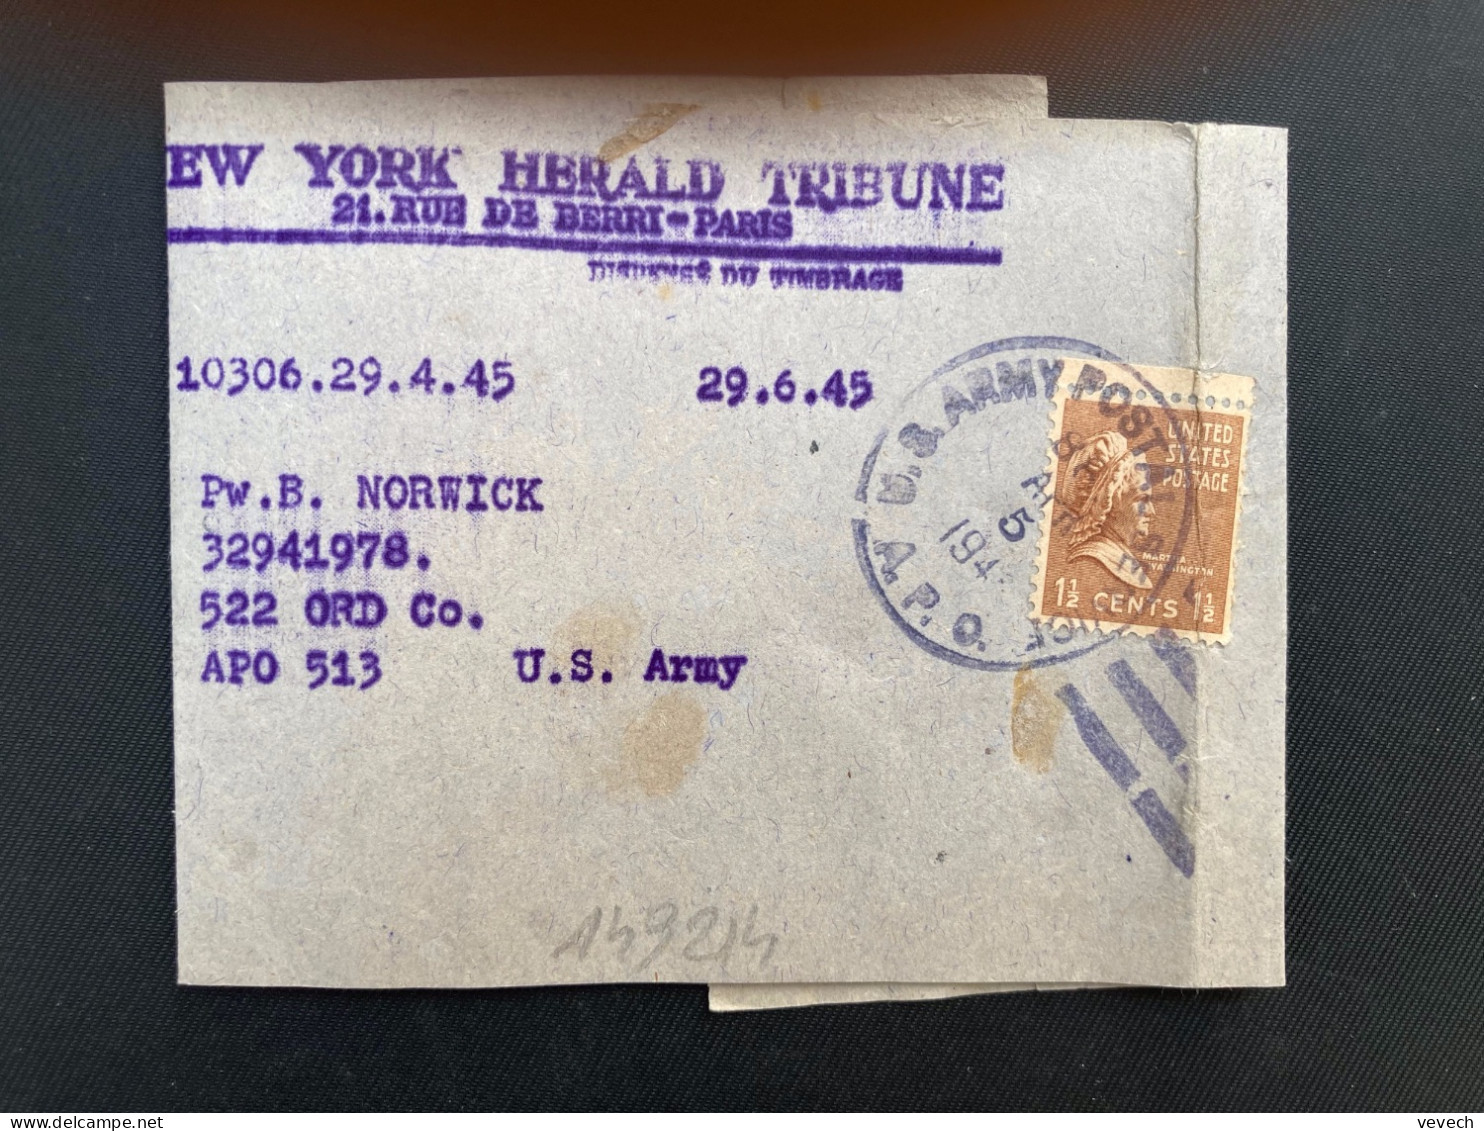 BJ NEW YORK HERALD TRIBUNE Pour APO 513 TP WASHINGTON 1 1/2c OBL.MEC.APR 5 1945 APO - Marcophilie